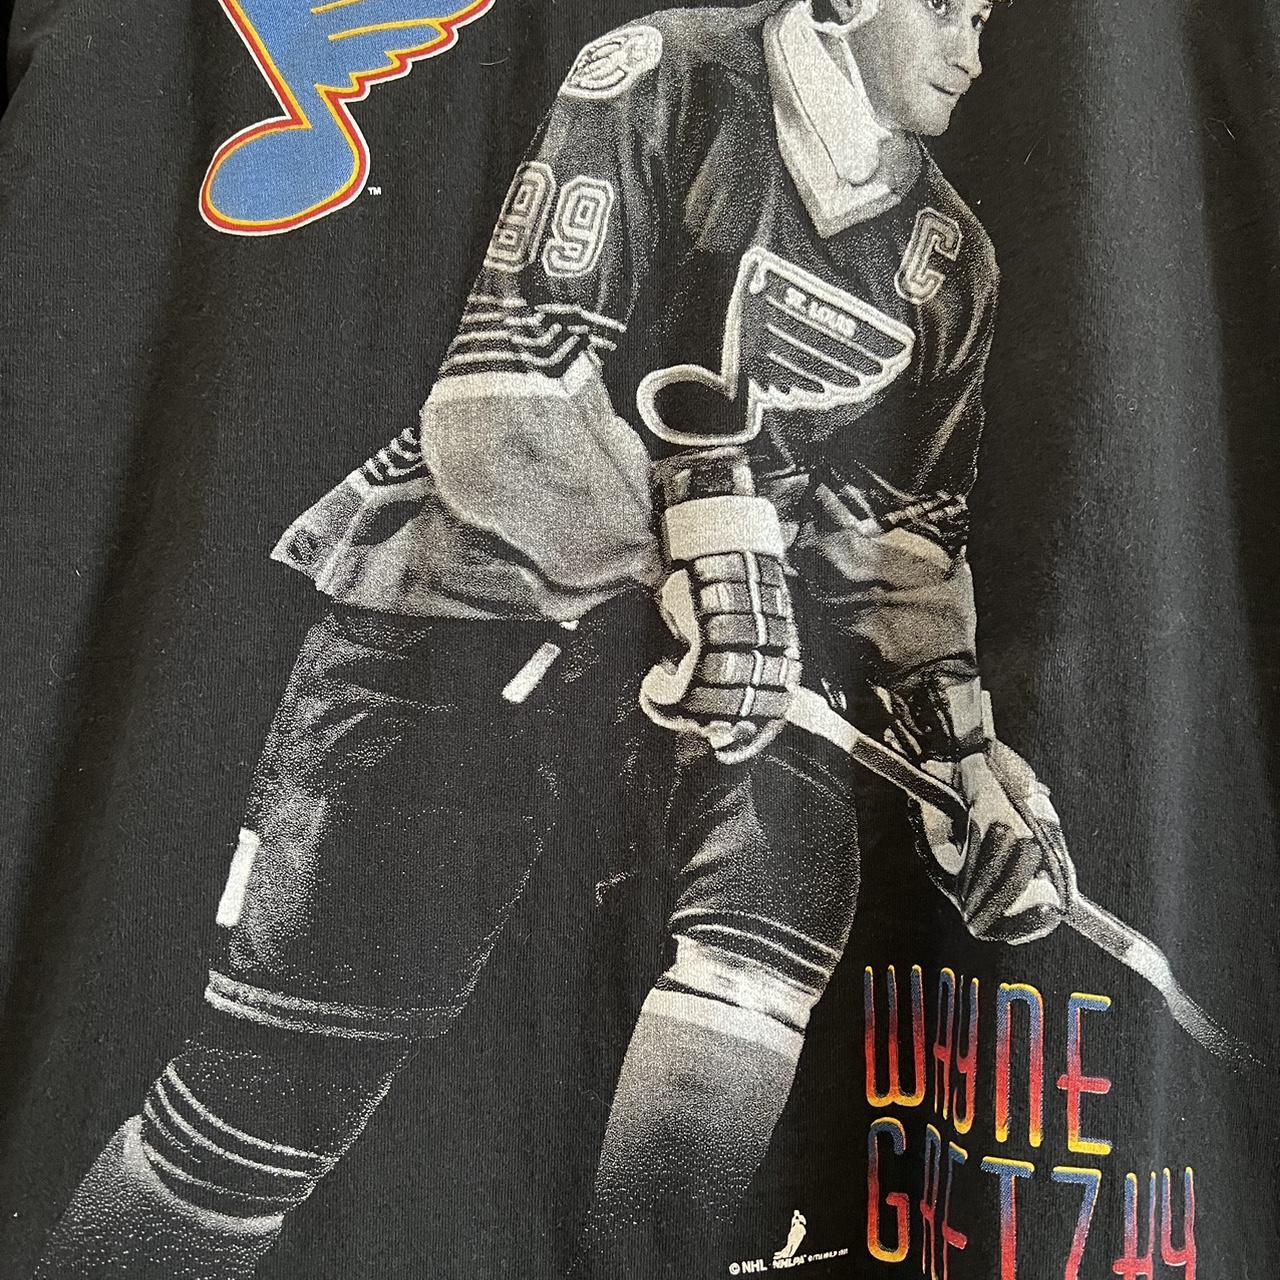 St. Louis Flyers Hockey T-Shirt